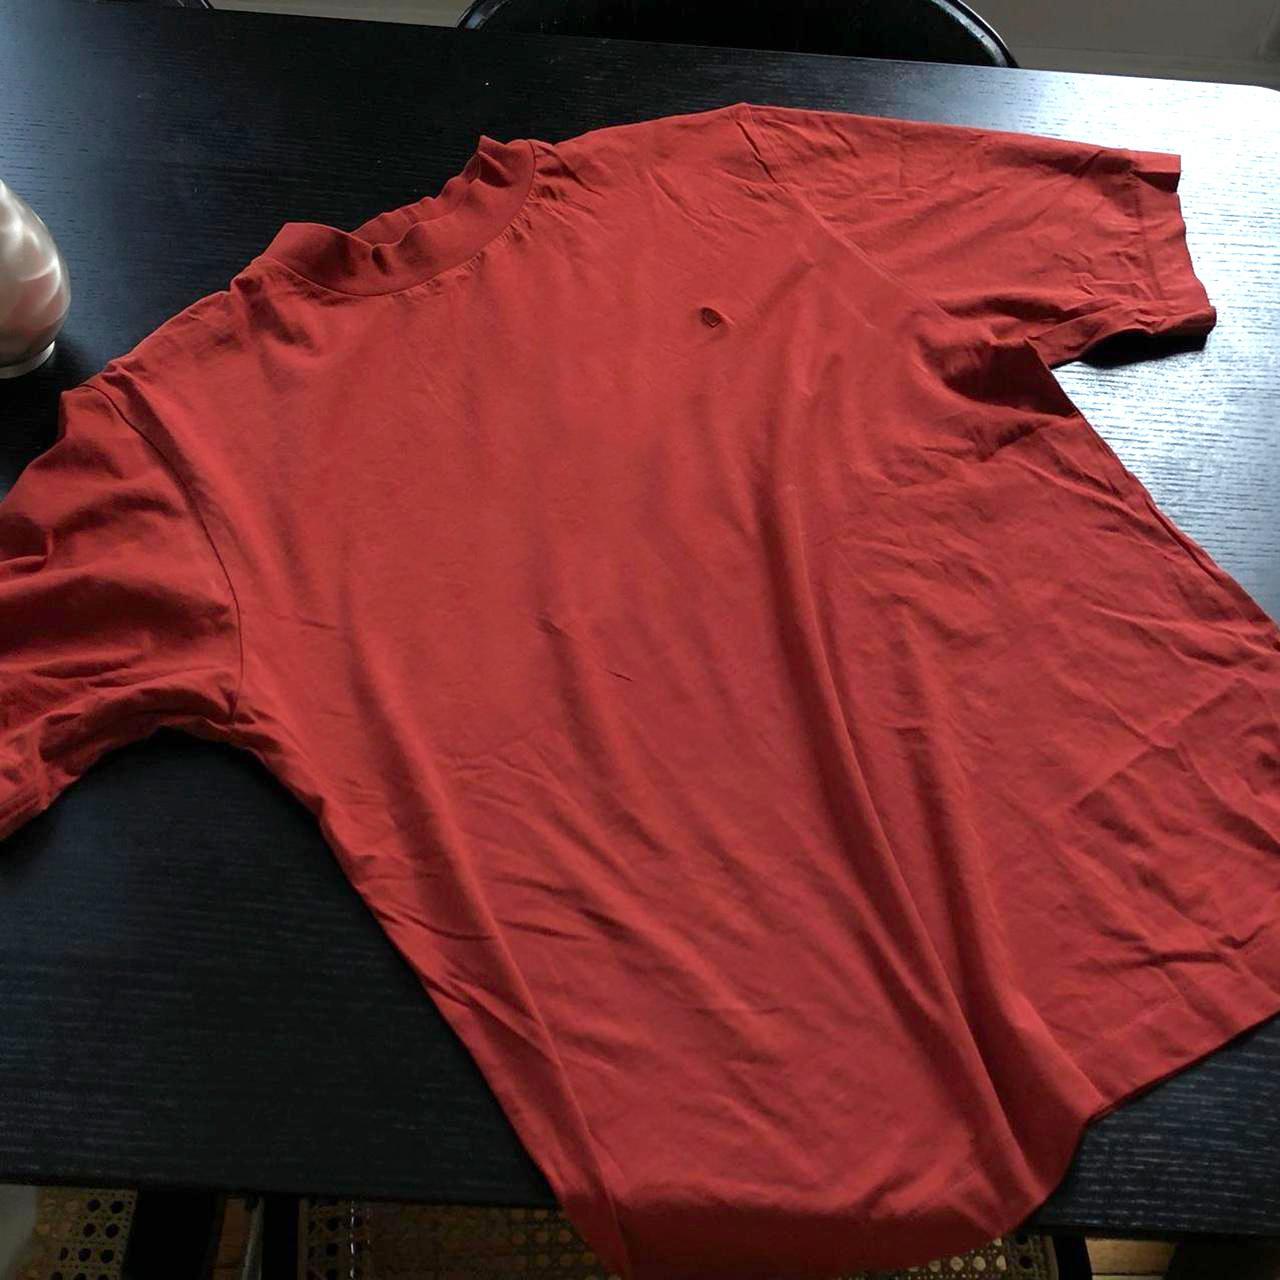 Product Image 1 - Études-studio tshirts
Muted brick color !!
Size